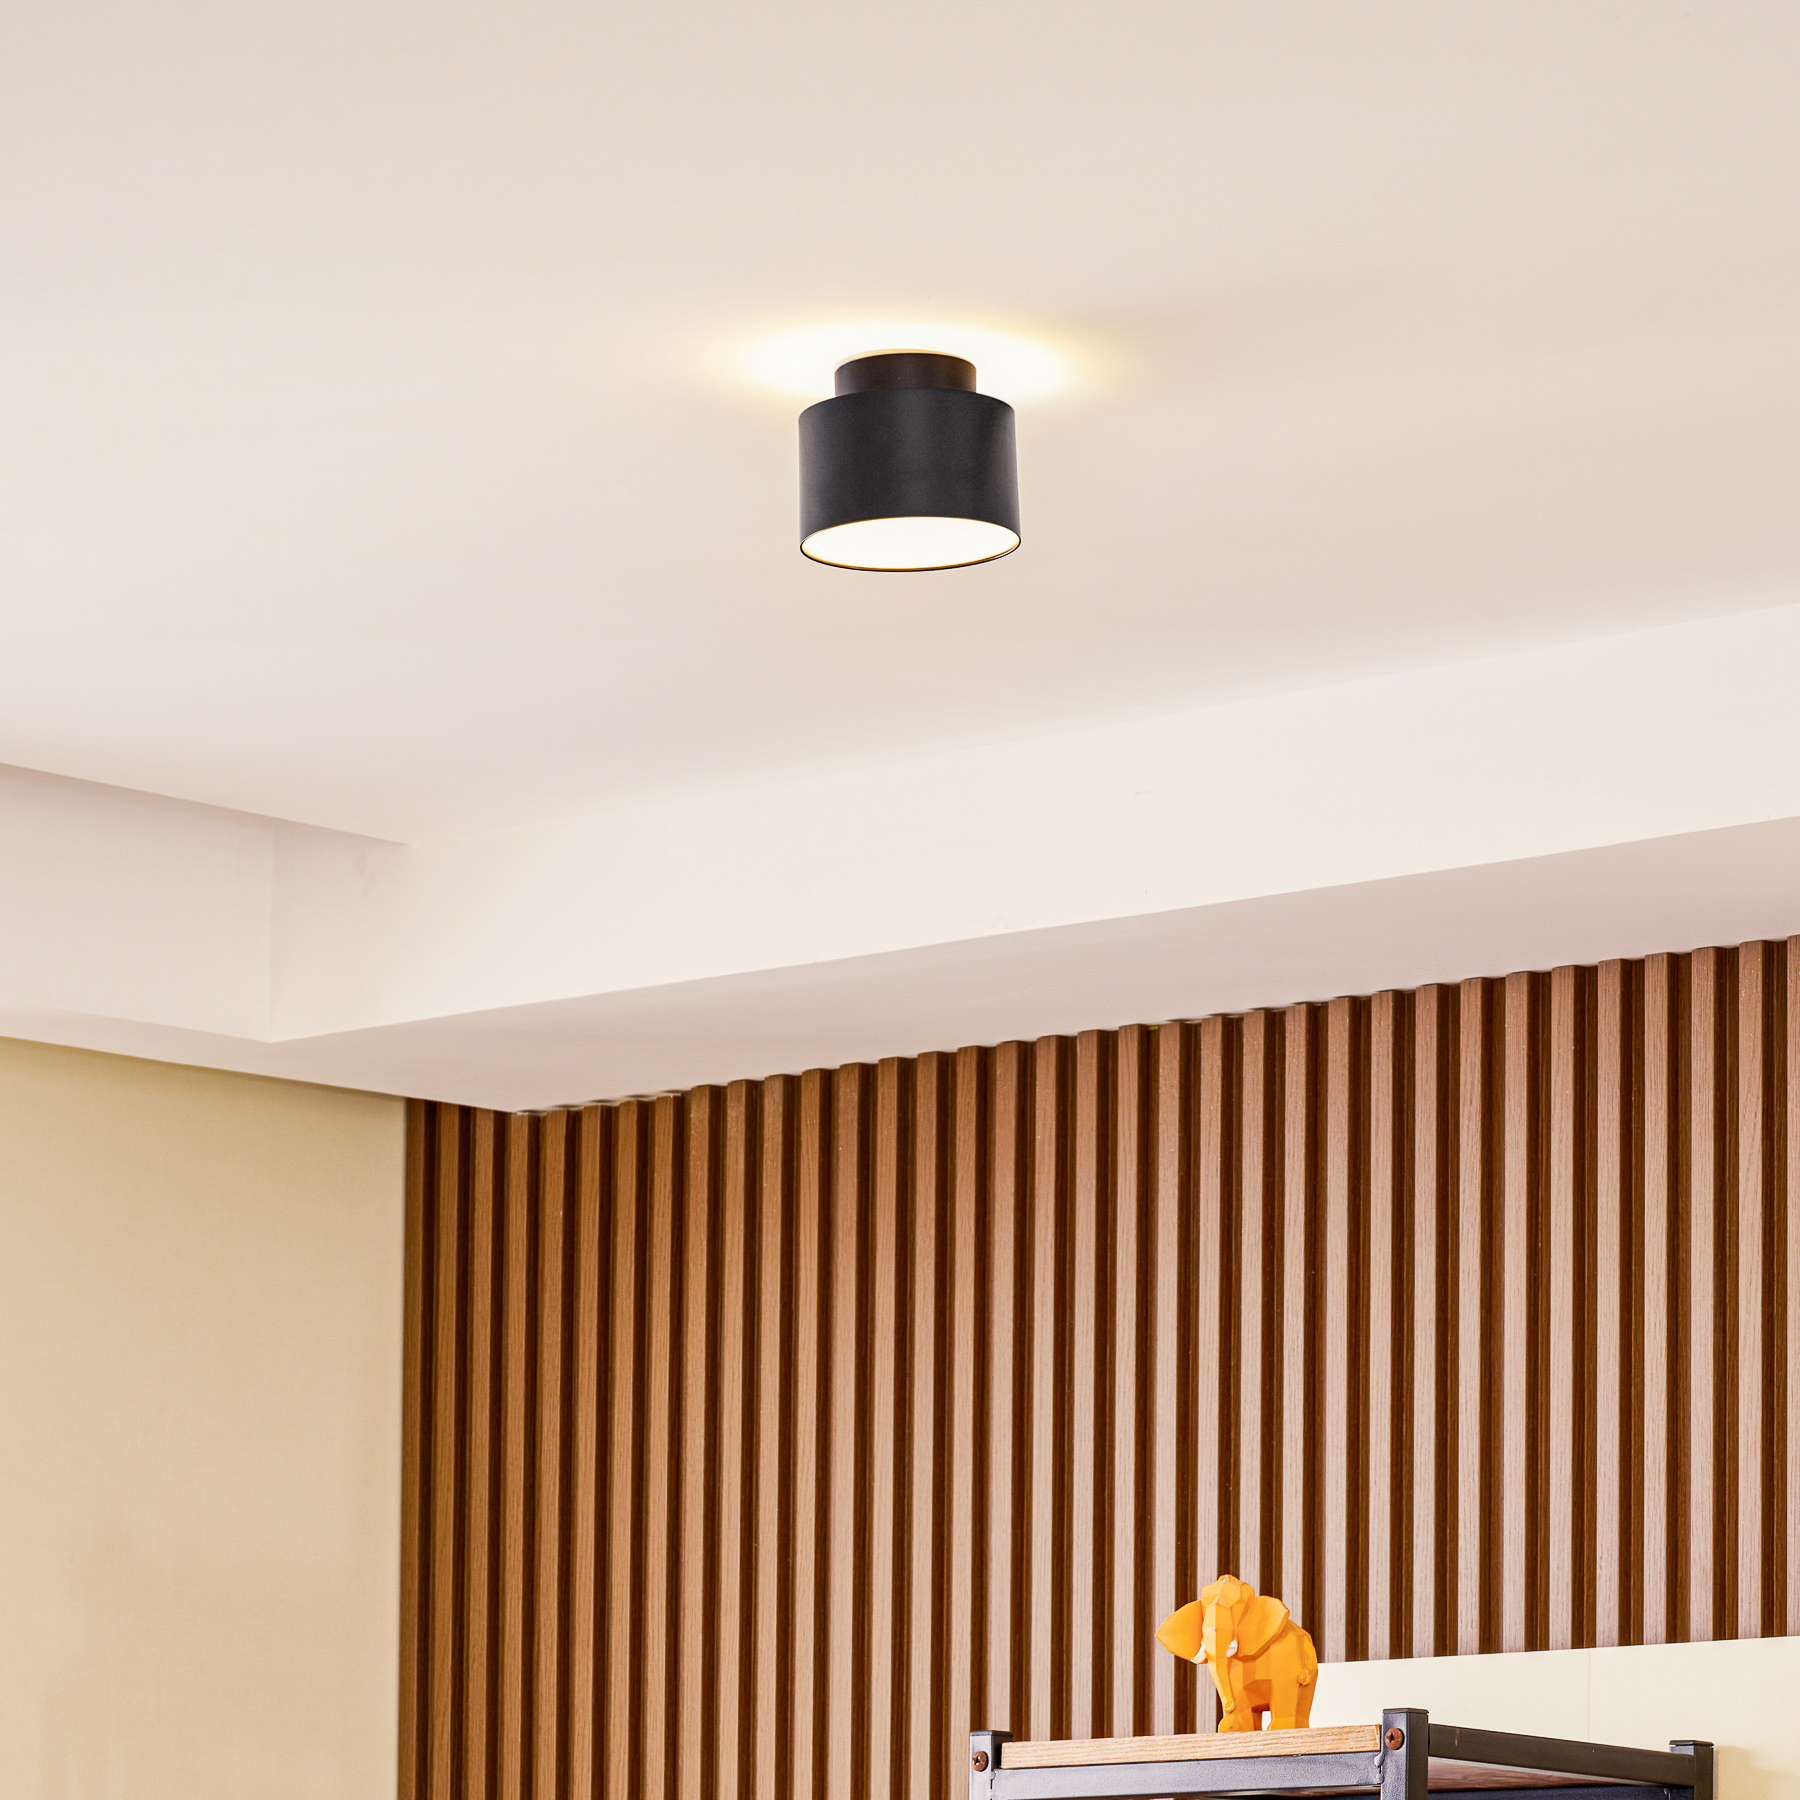 Lindby LED spot Nivoria, 11 x 8,8 cm, zandzwart, set van 4